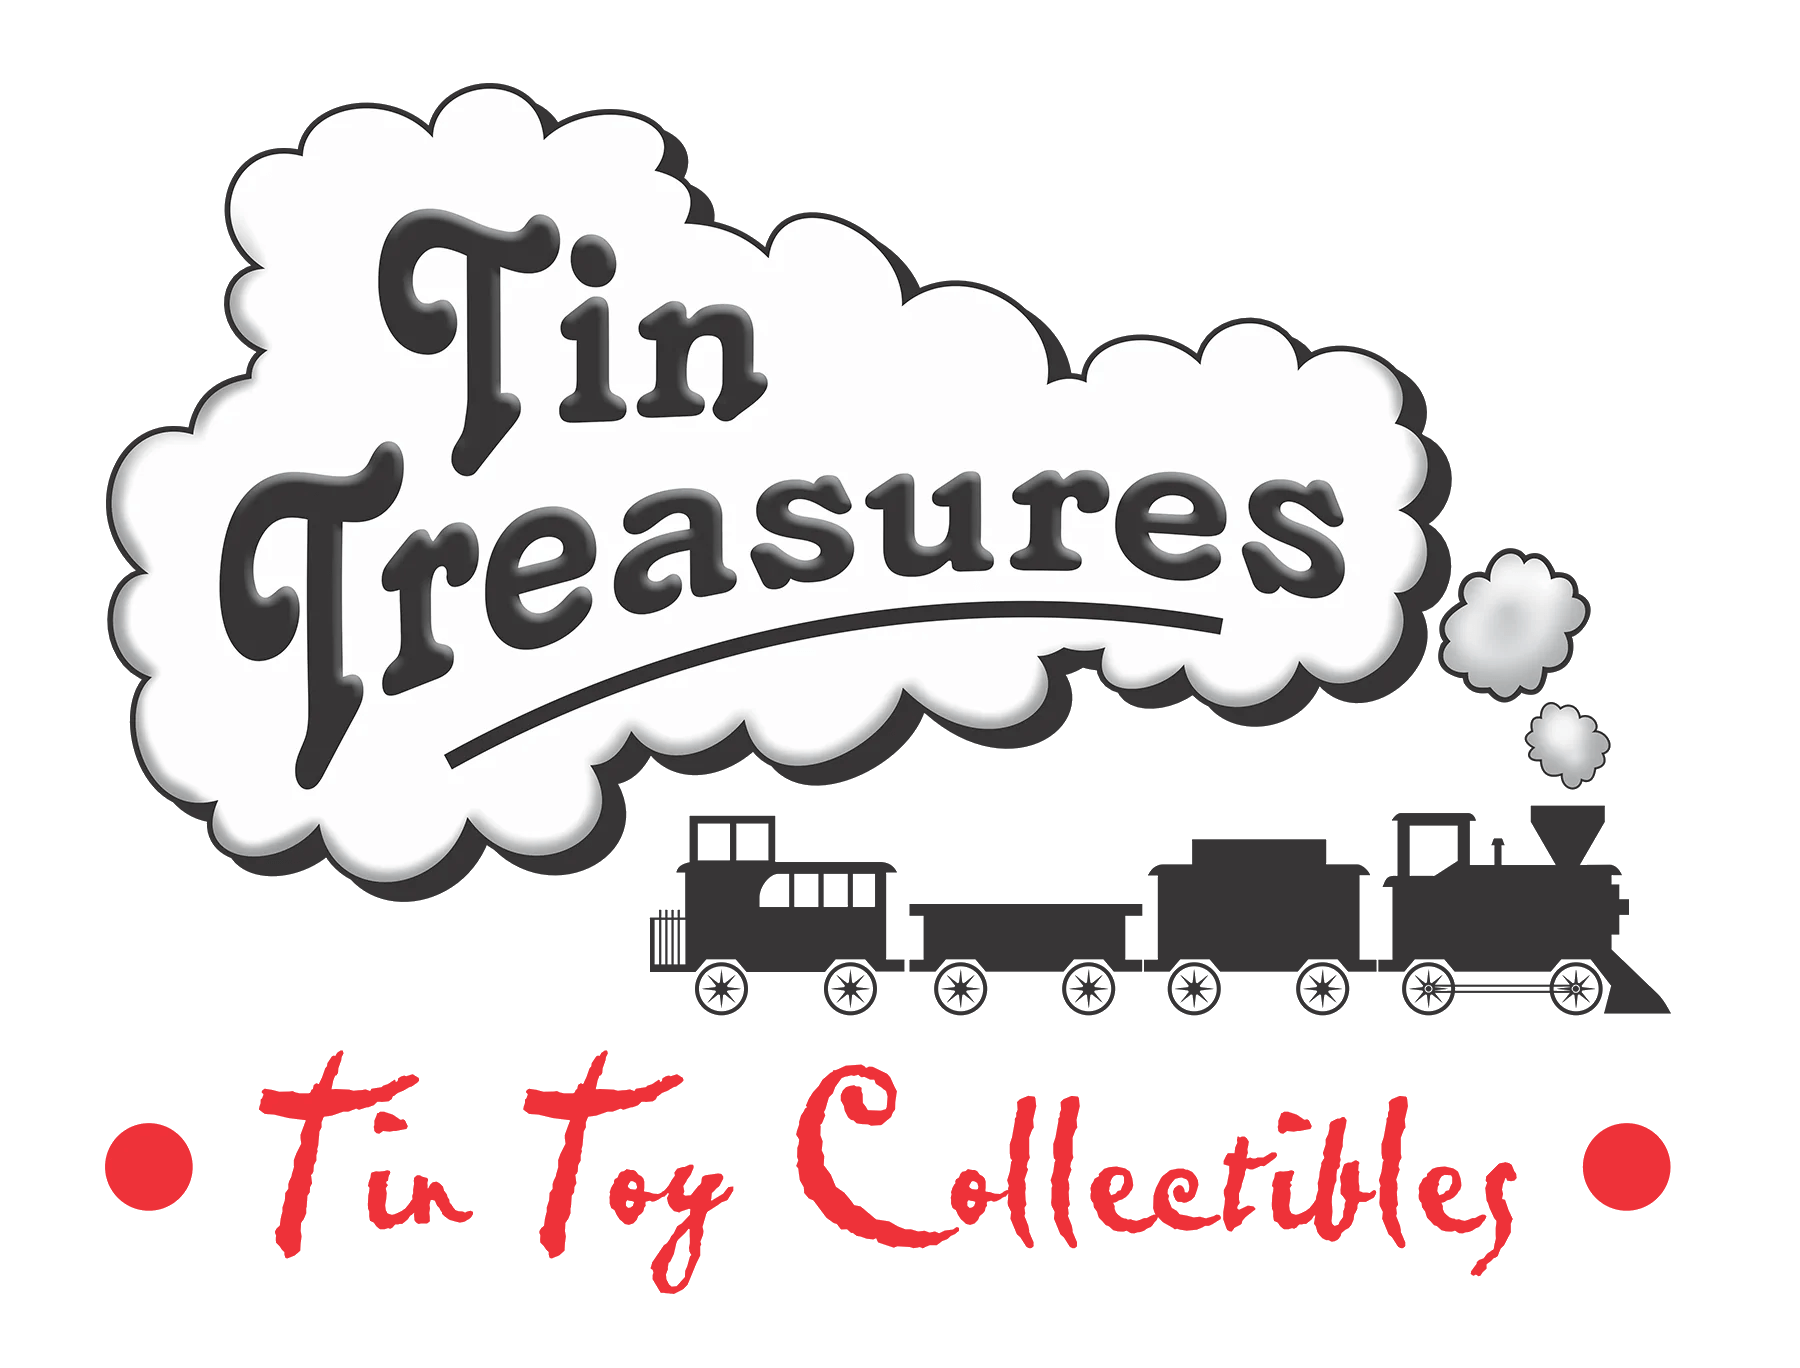 Tin Treasures